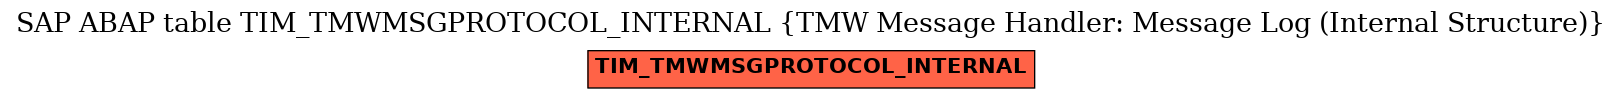 E-R Diagram for table TIM_TMWMSGPROTOCOL_INTERNAL (TMW Message Handler: Message Log (Internal Structure))